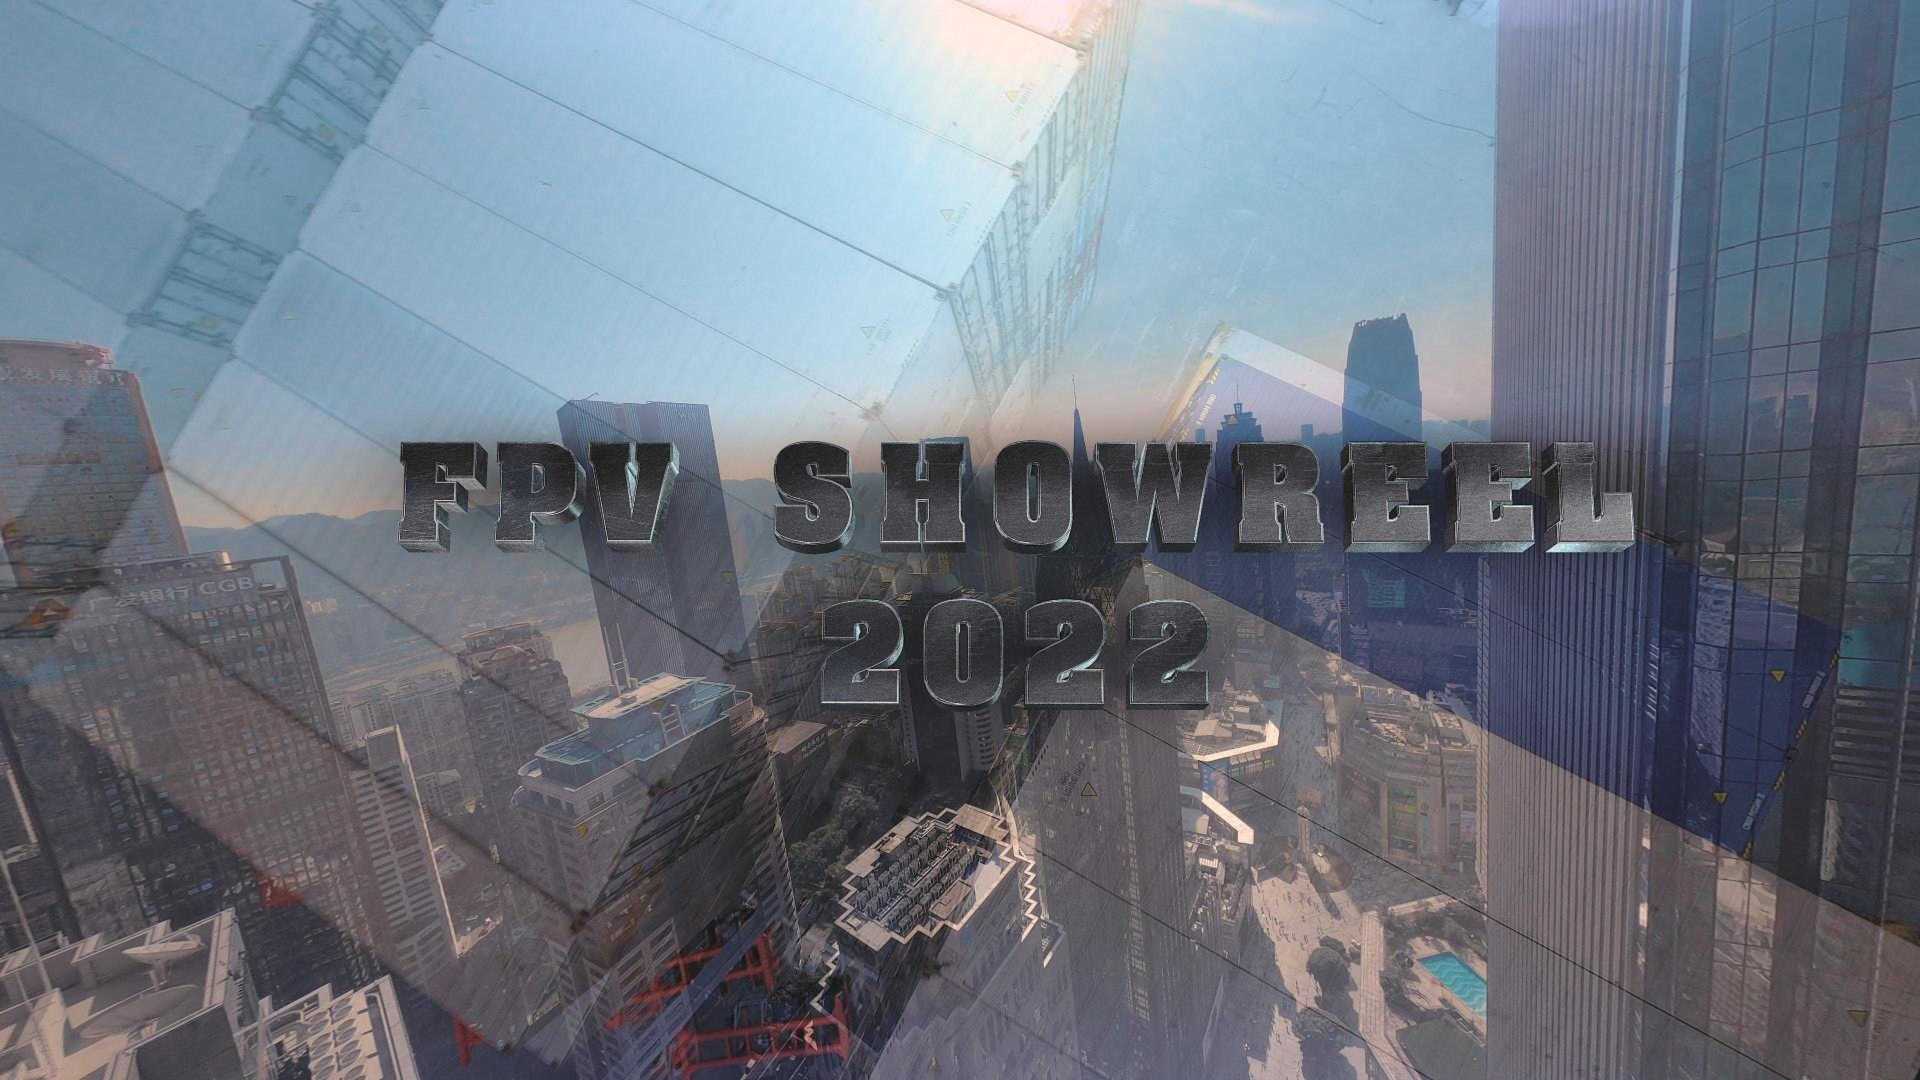 2022FPV Showreel 年度作品集